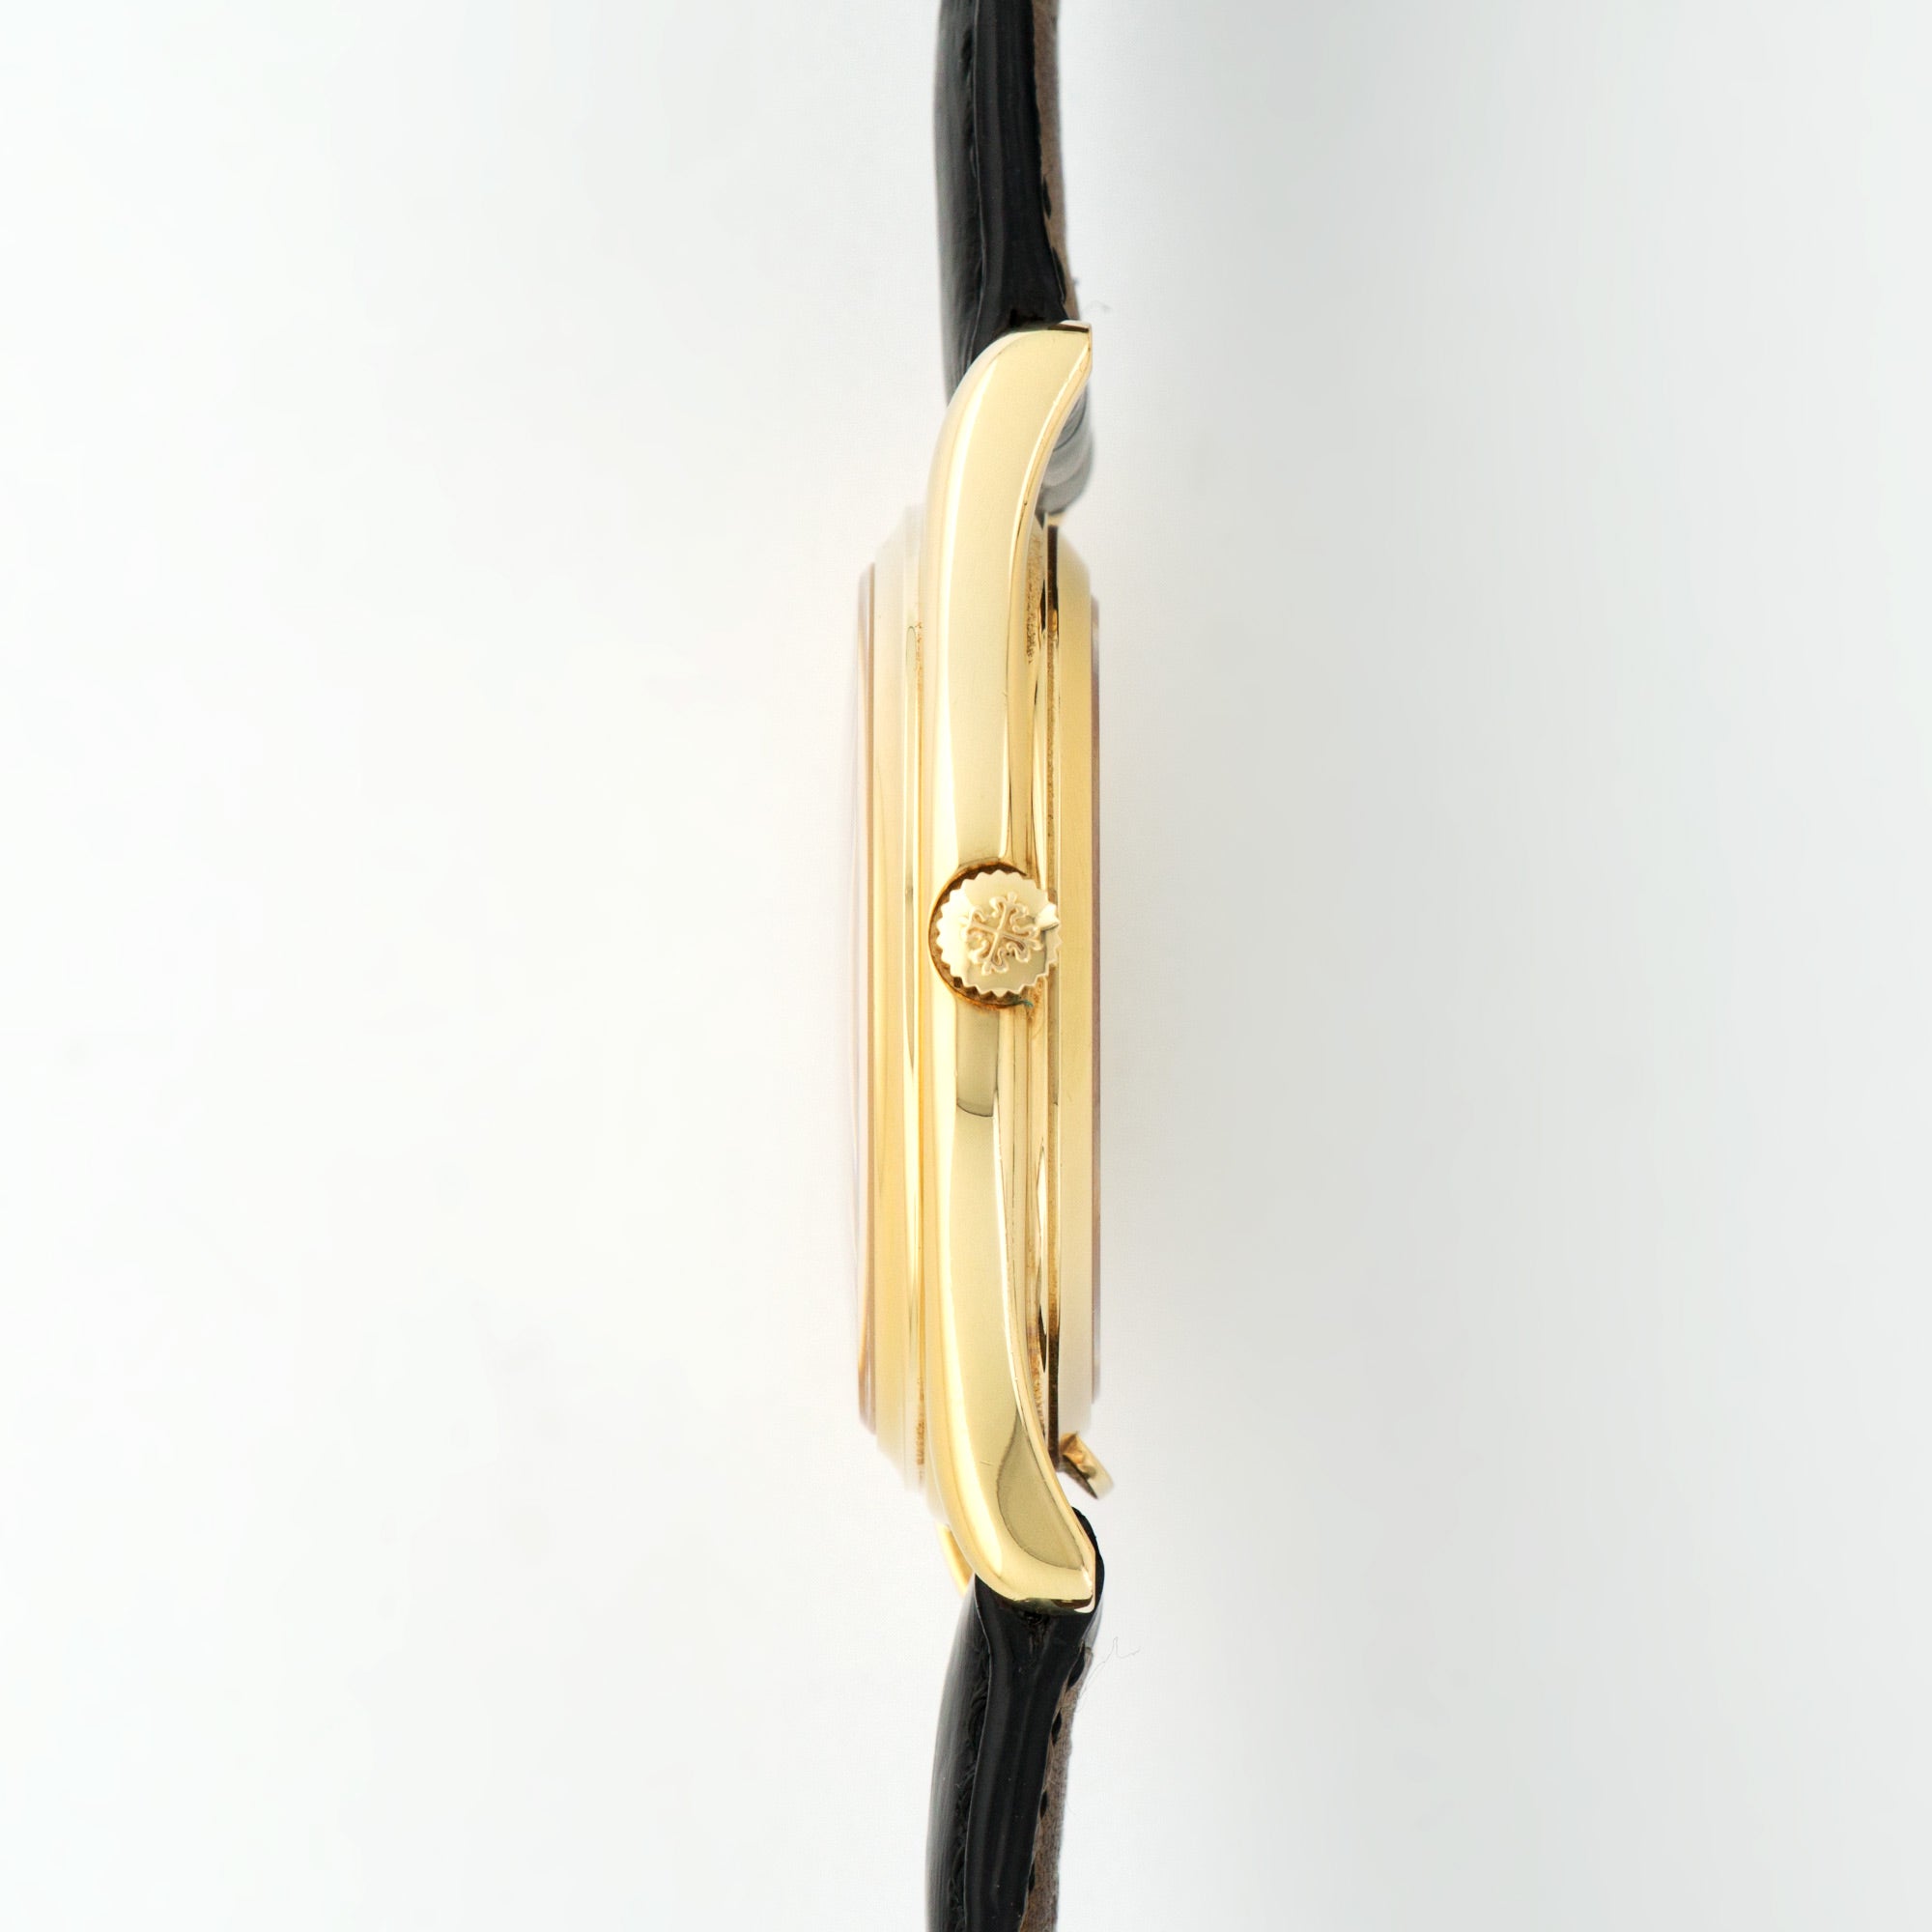 Patek Philippe - Patek Philippe Yellow Gold Perpetual Calendar Watch Ref. 3940J - The Keystone Watches